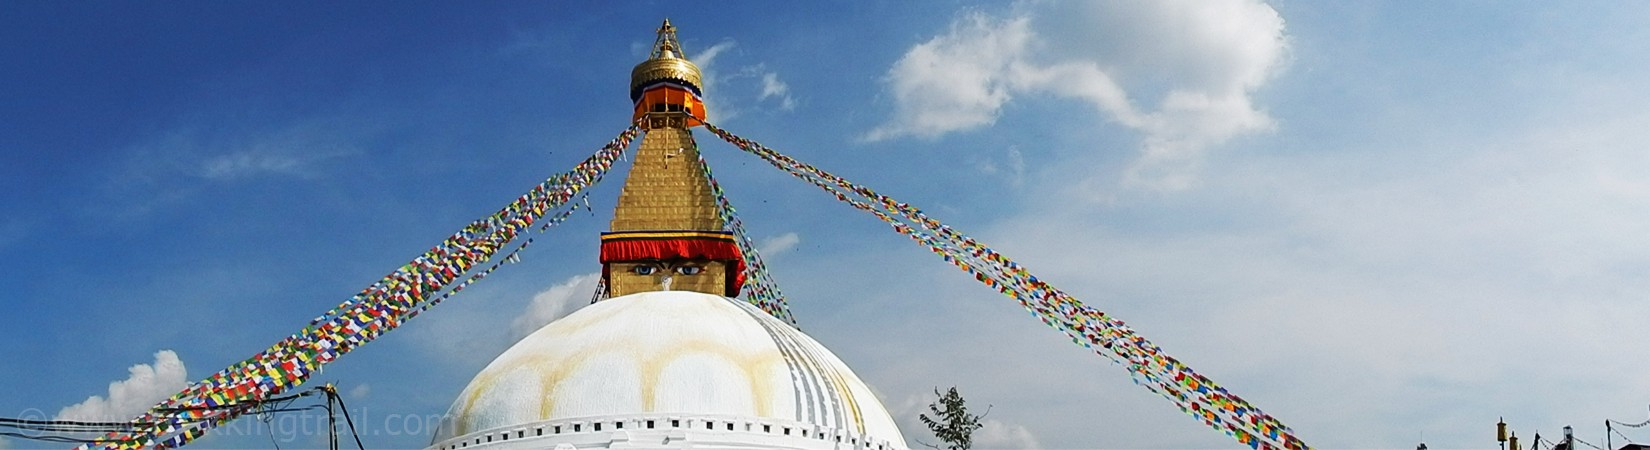 glimpse of nepal tour